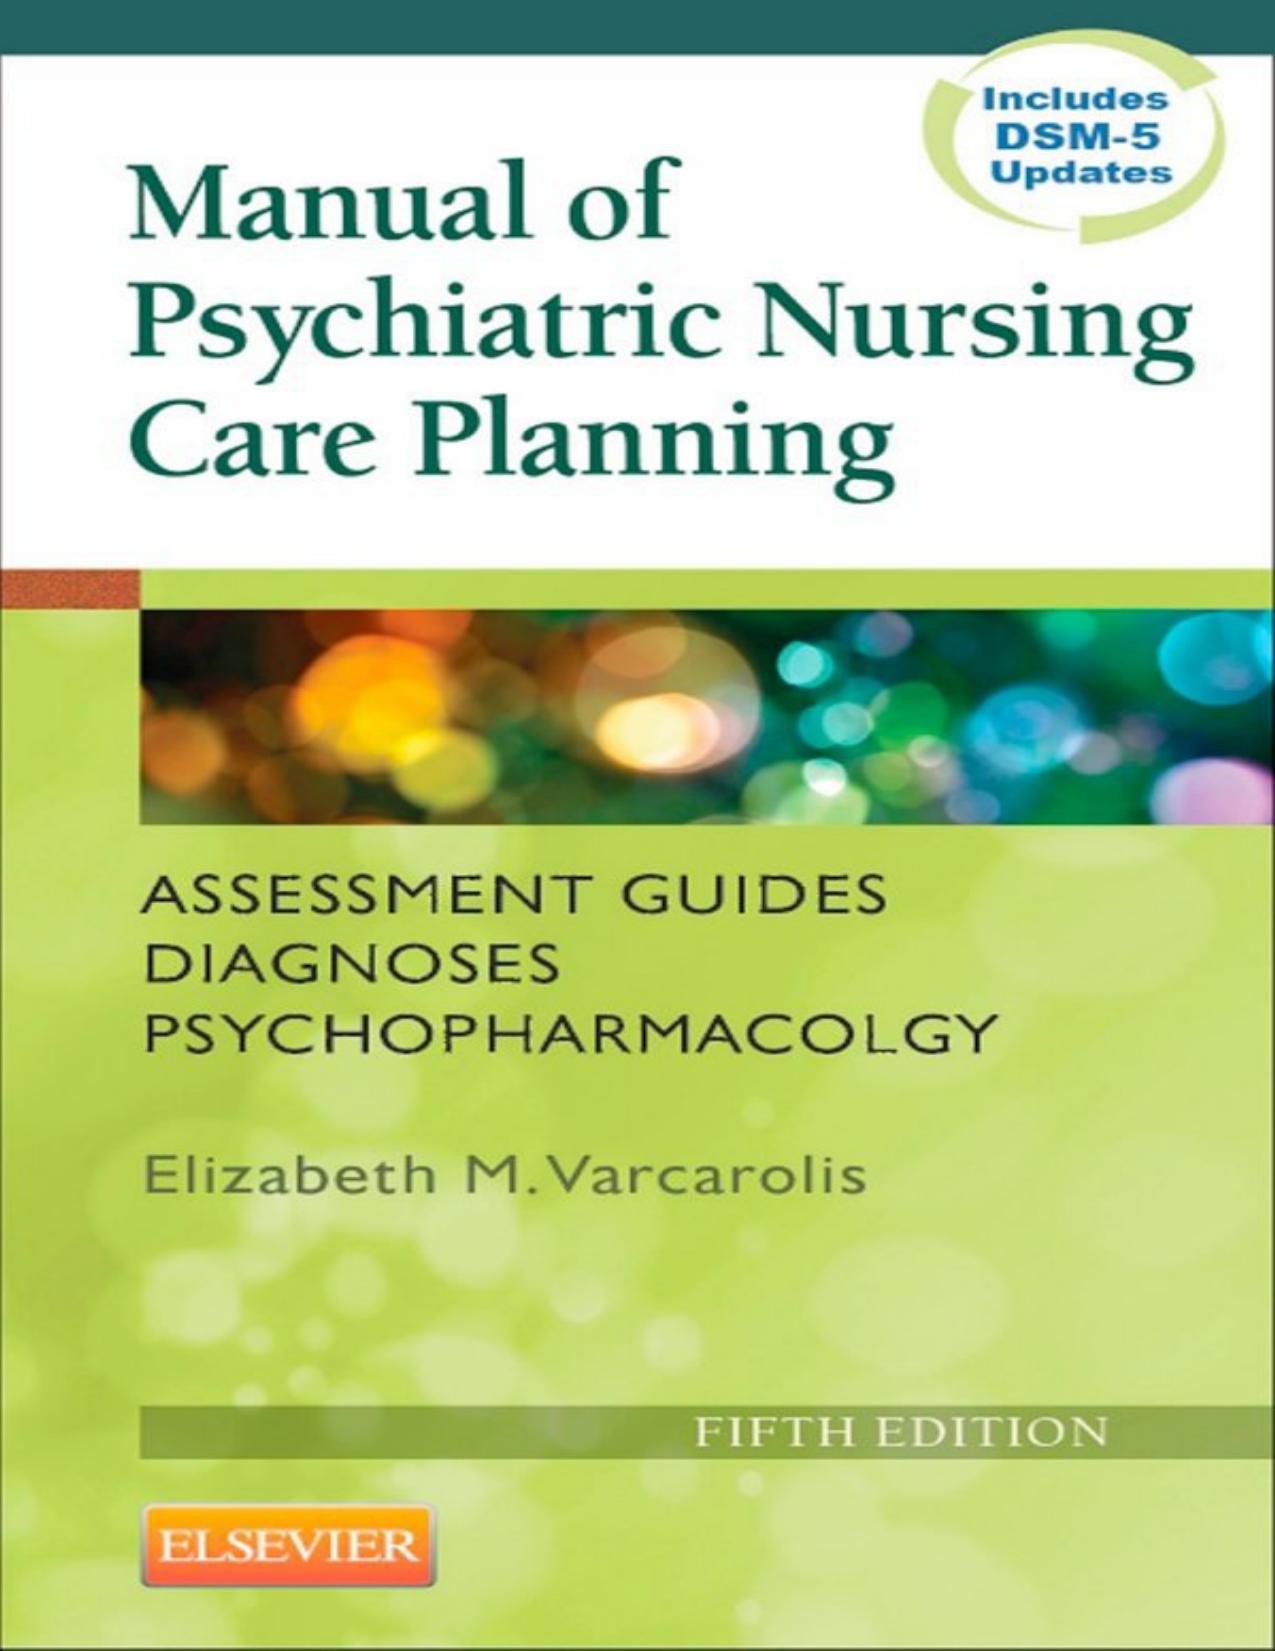 Manual of Psychiatric Nursing Care Planning by Elizabeth M. Varcarolis